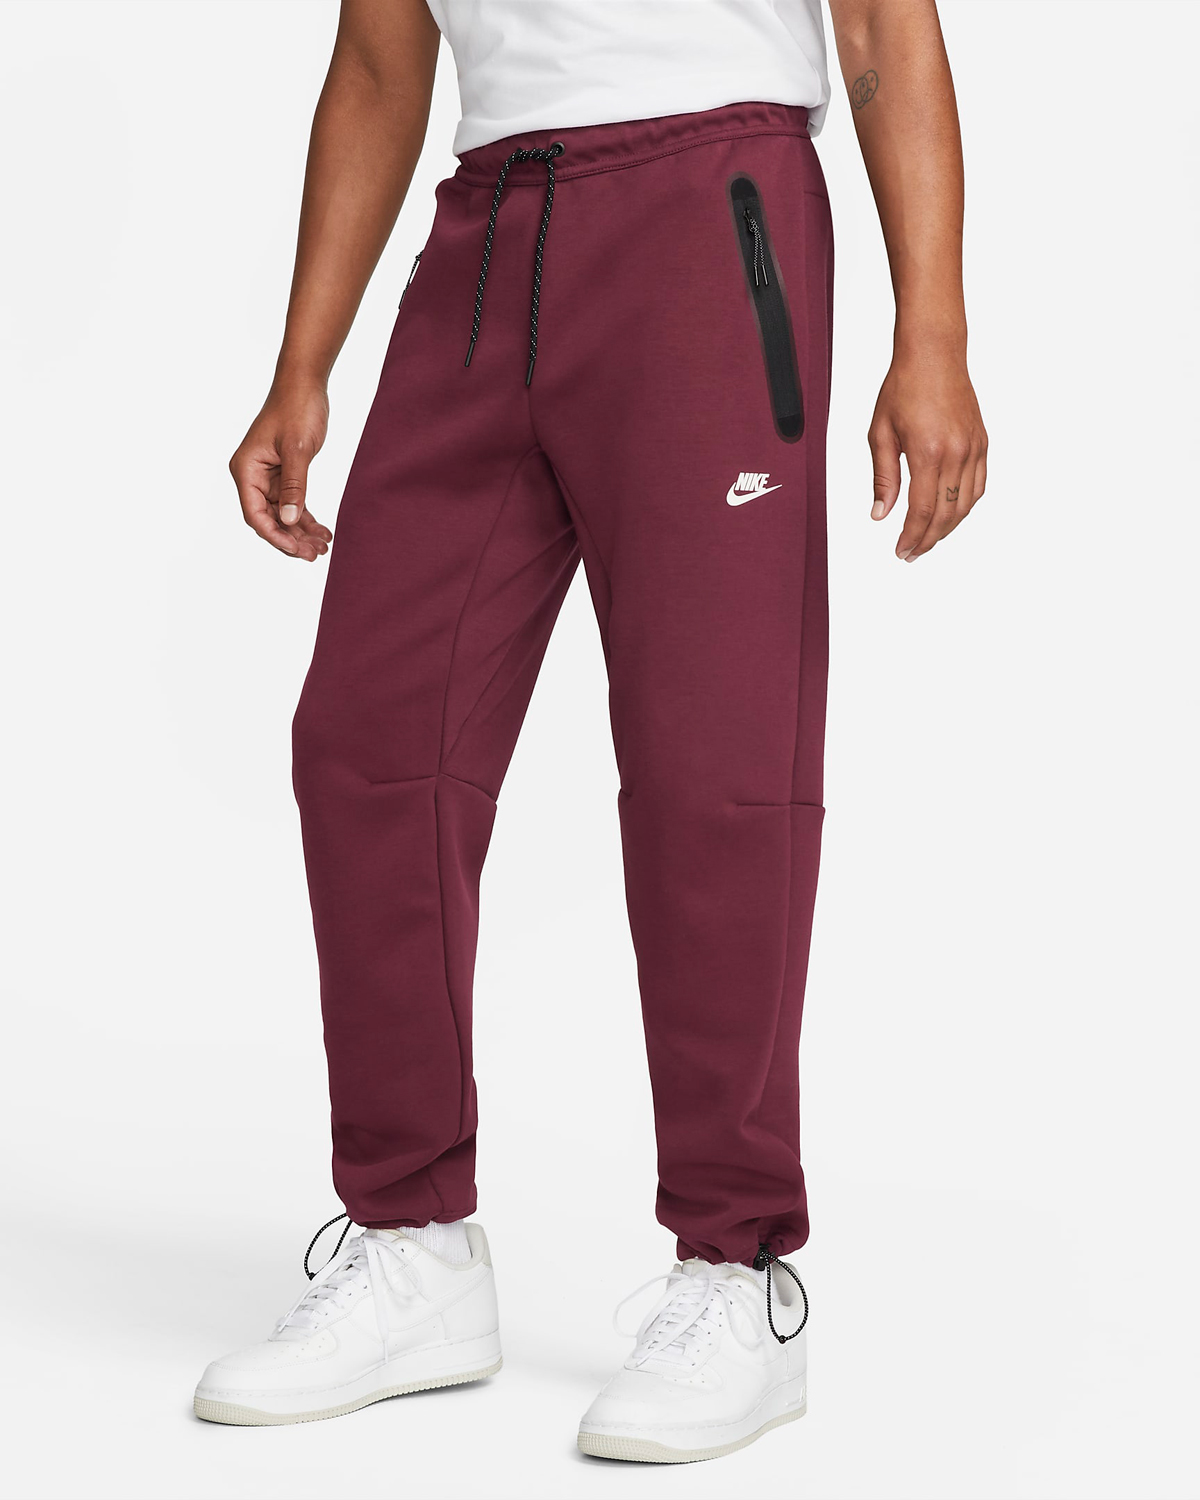 Nike-Tech-Fleece-Pants-Dark-Beetroot